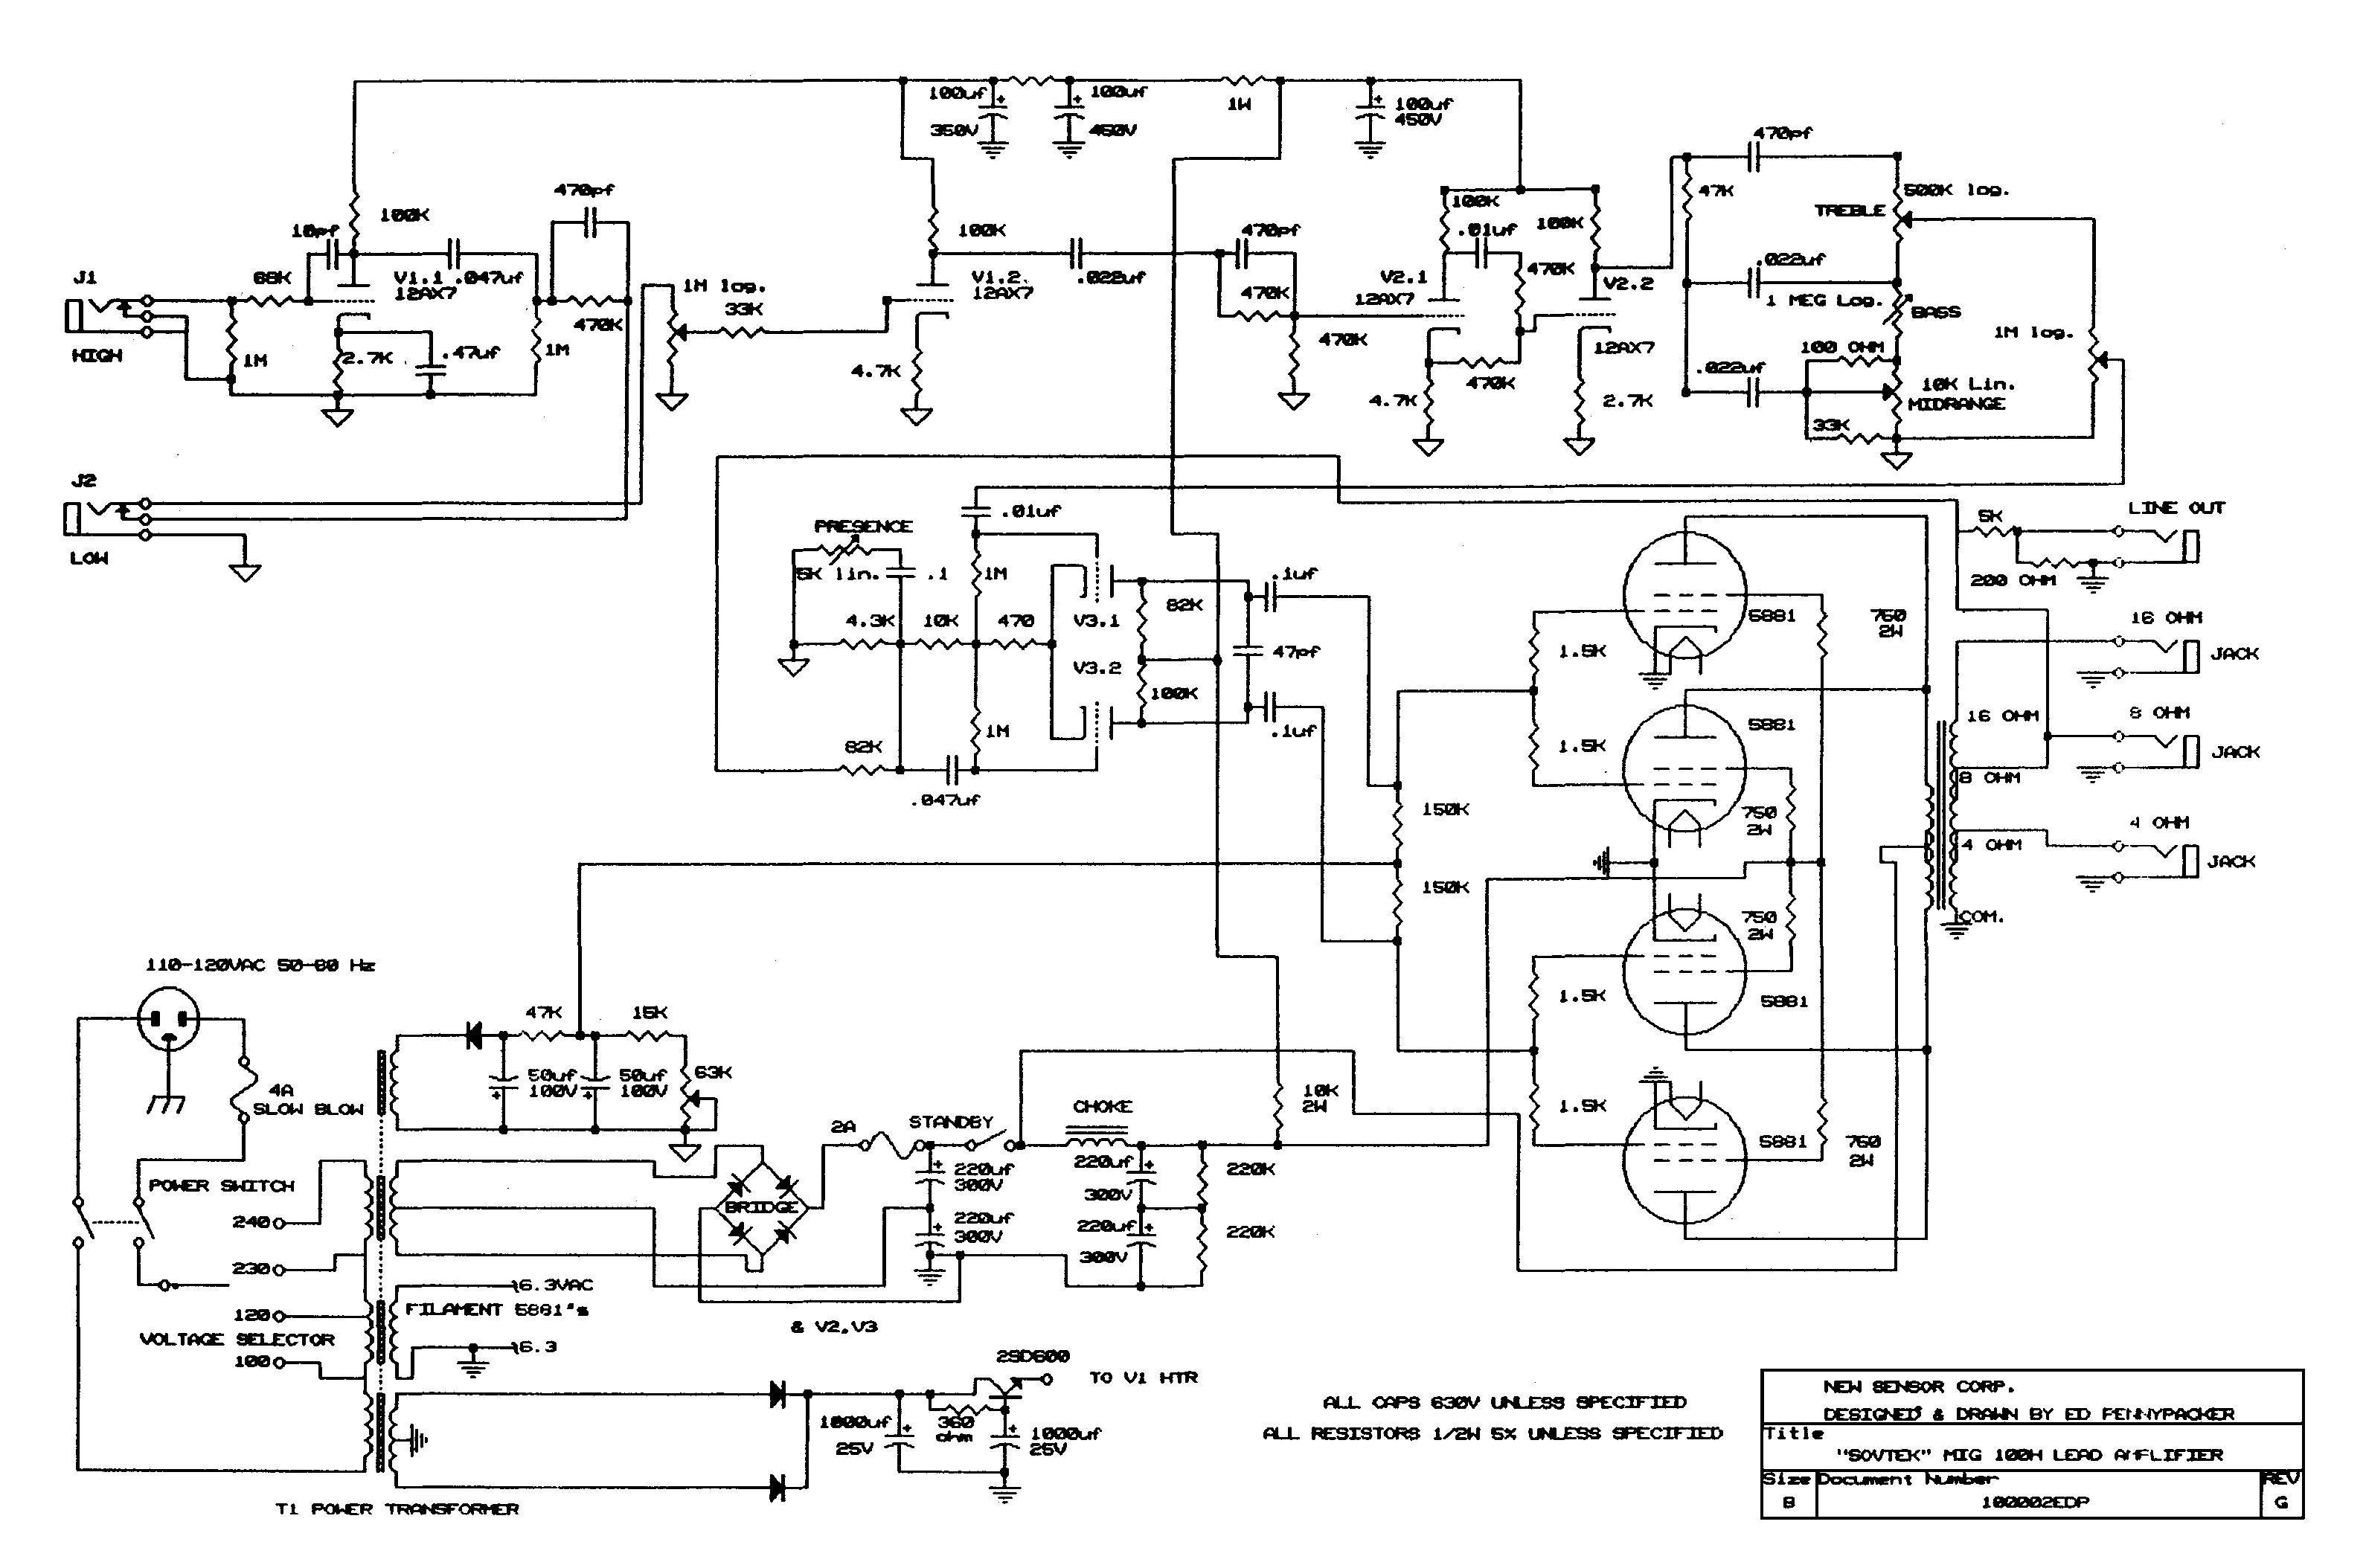 Схема Sovtek - MIG 100H Lead Amplifier